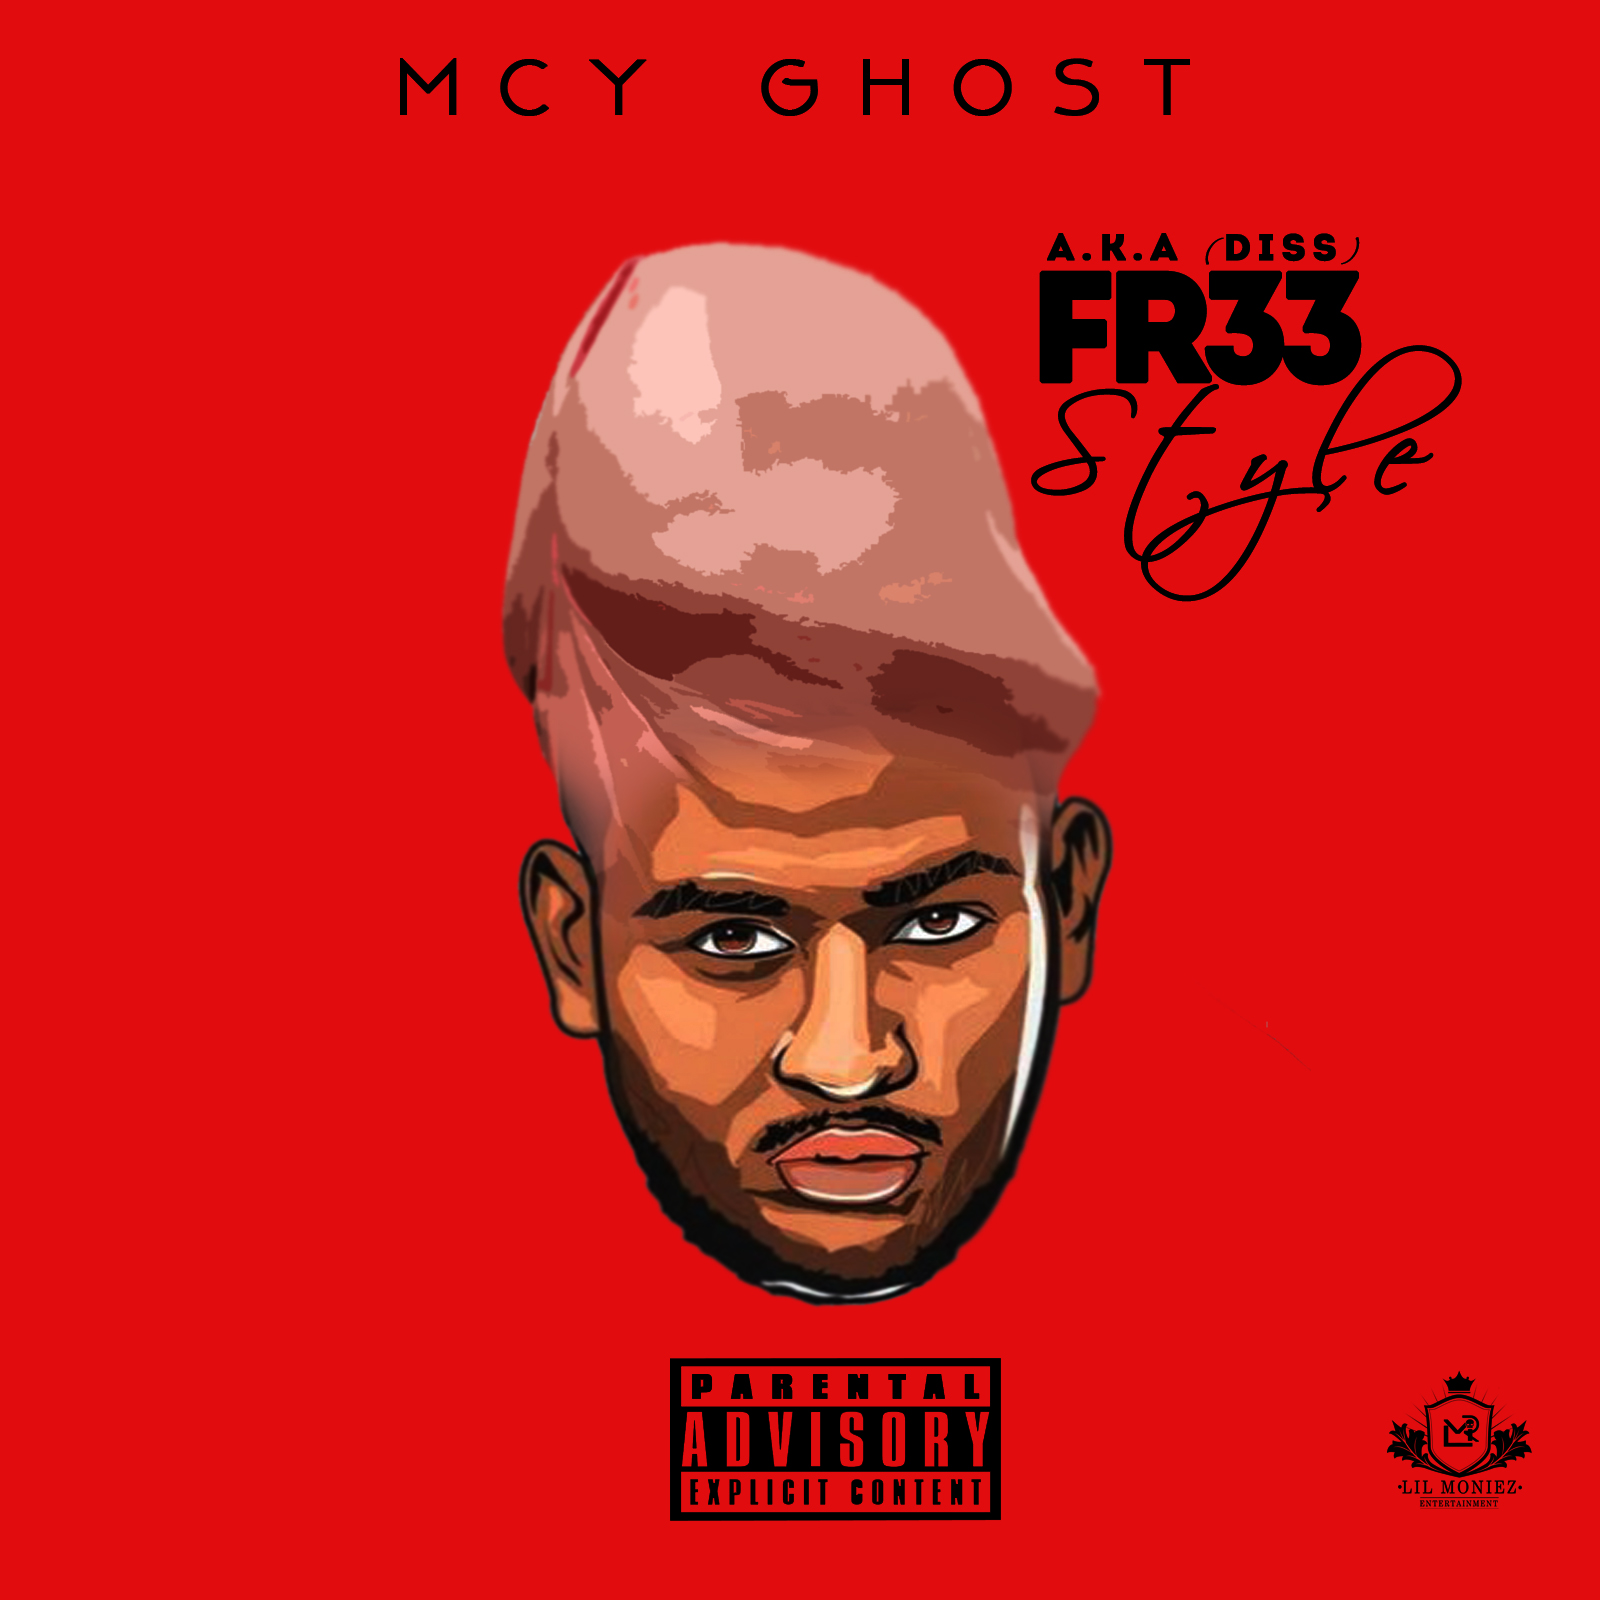 Mcy Ghost – FR33STYLE (A.K.A Diss) Lyrics